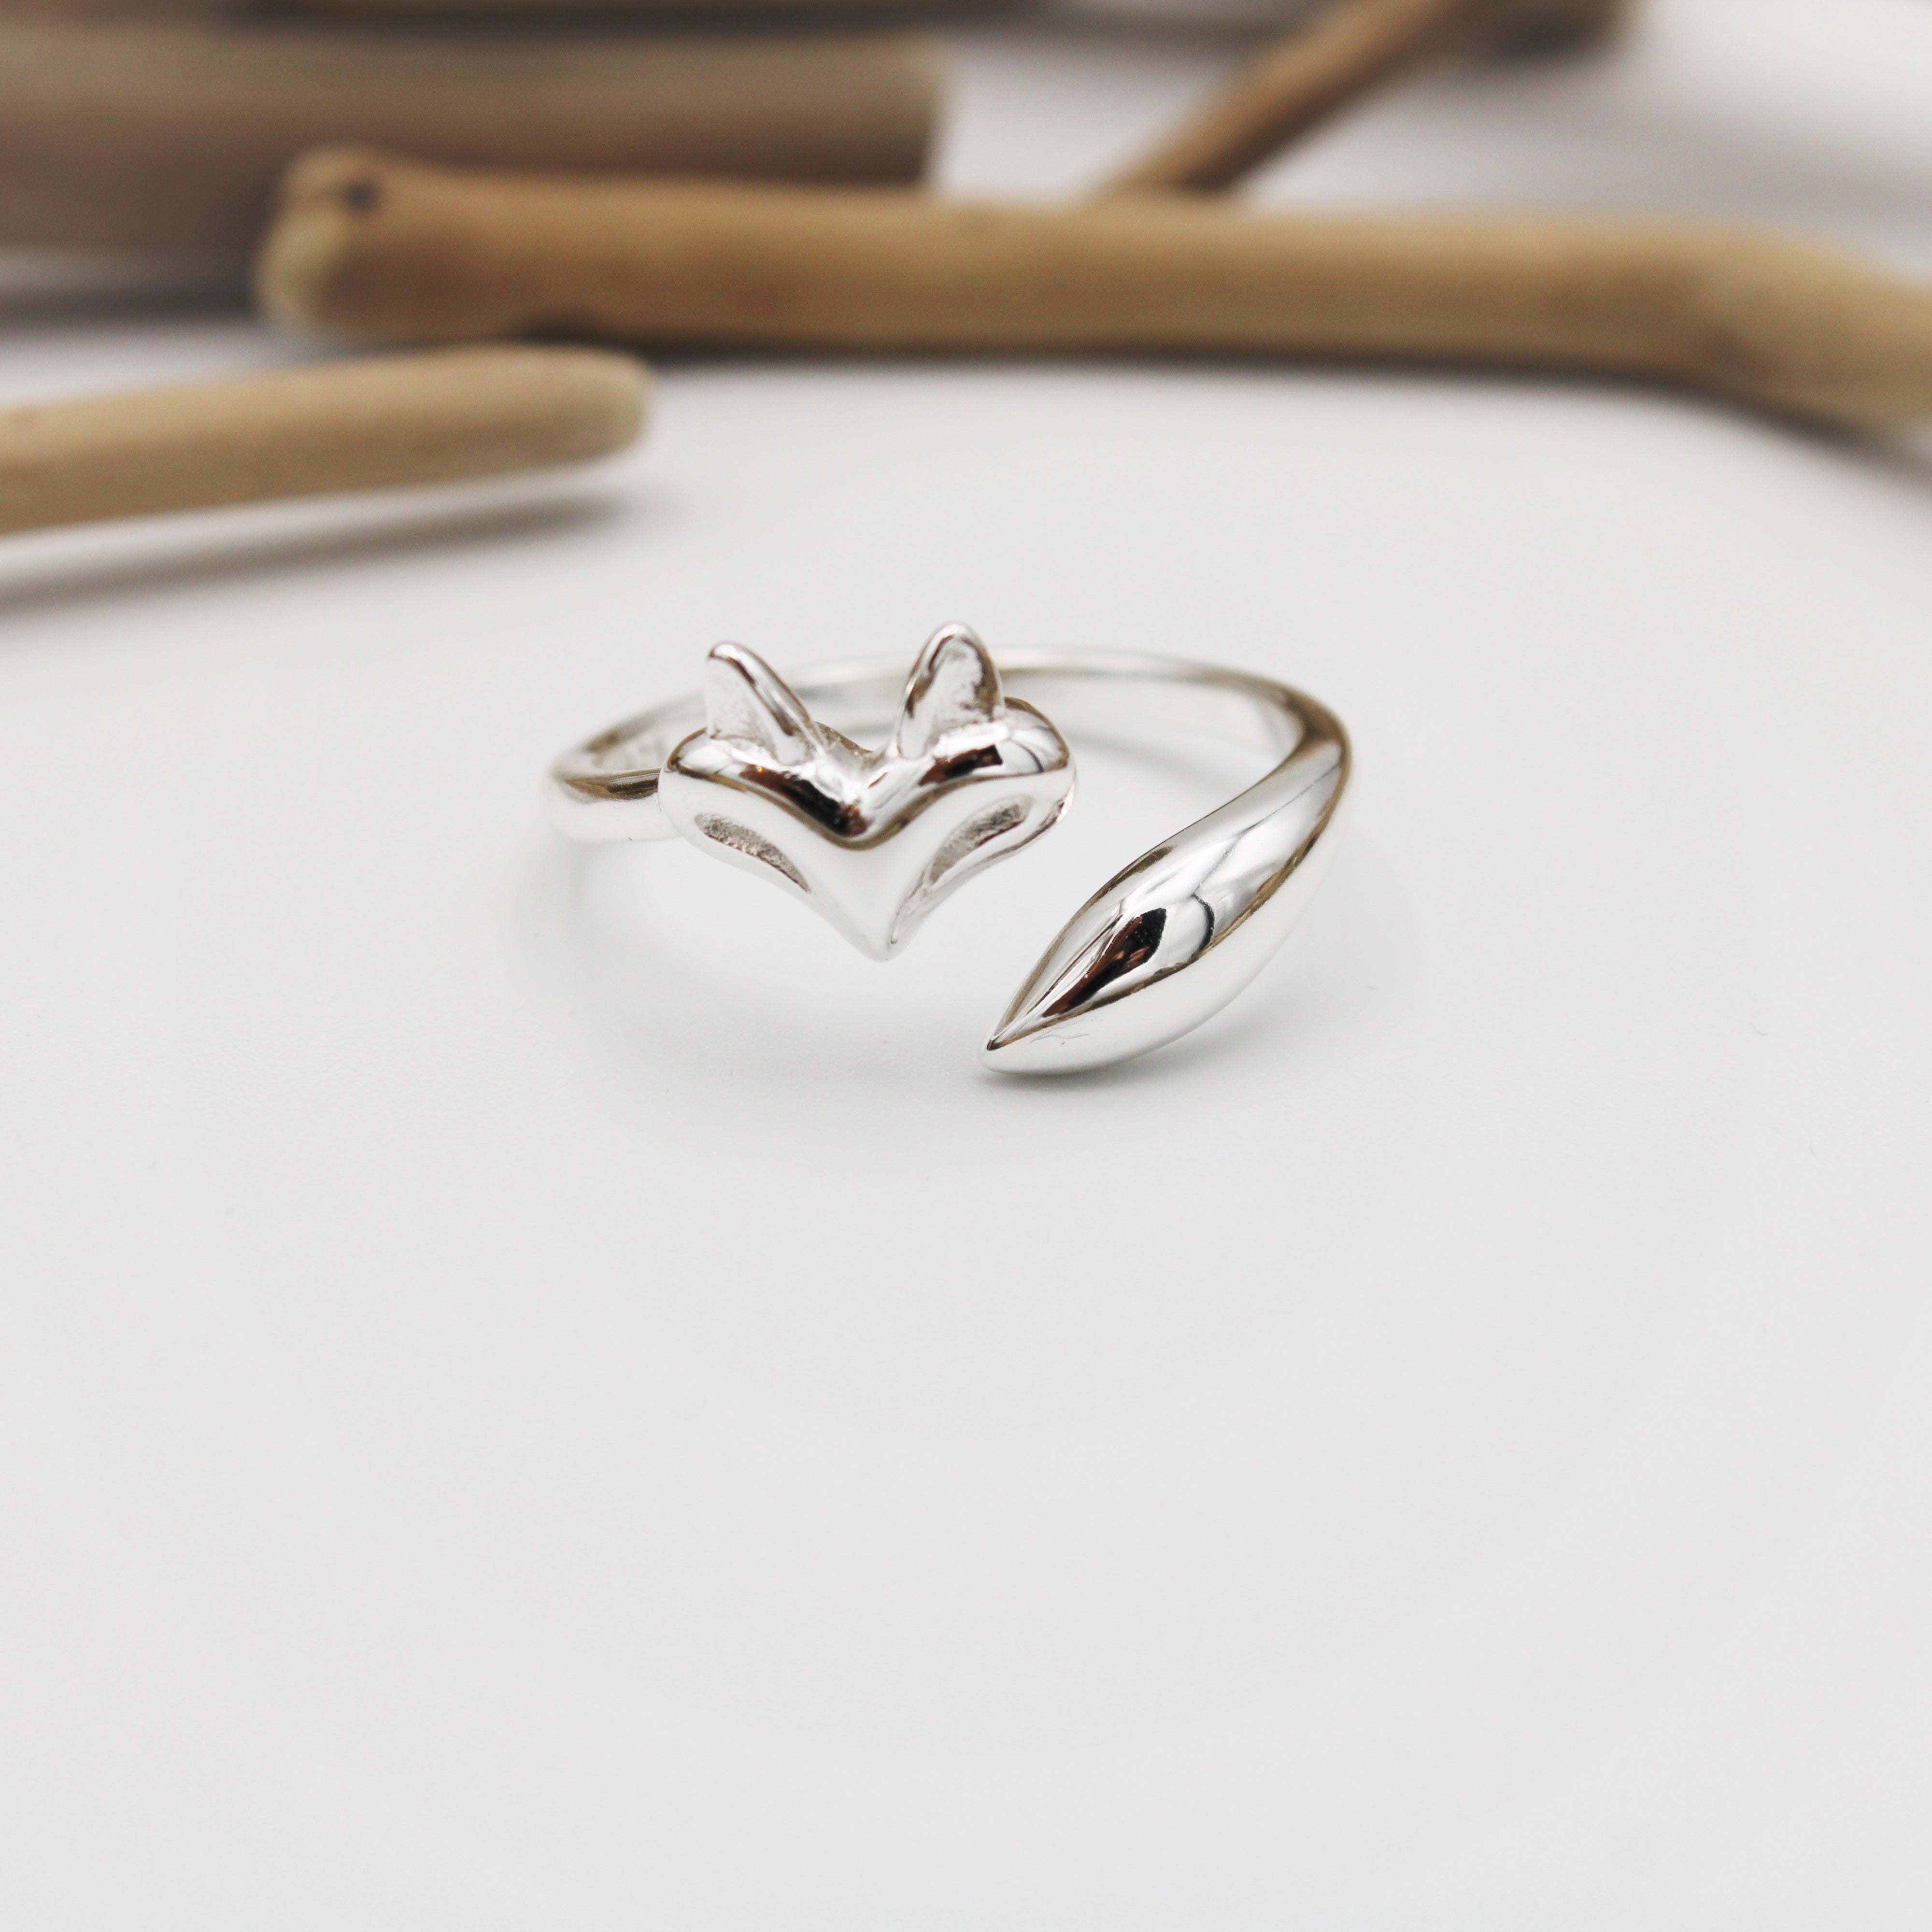 Silver Fox Adjustable Ring